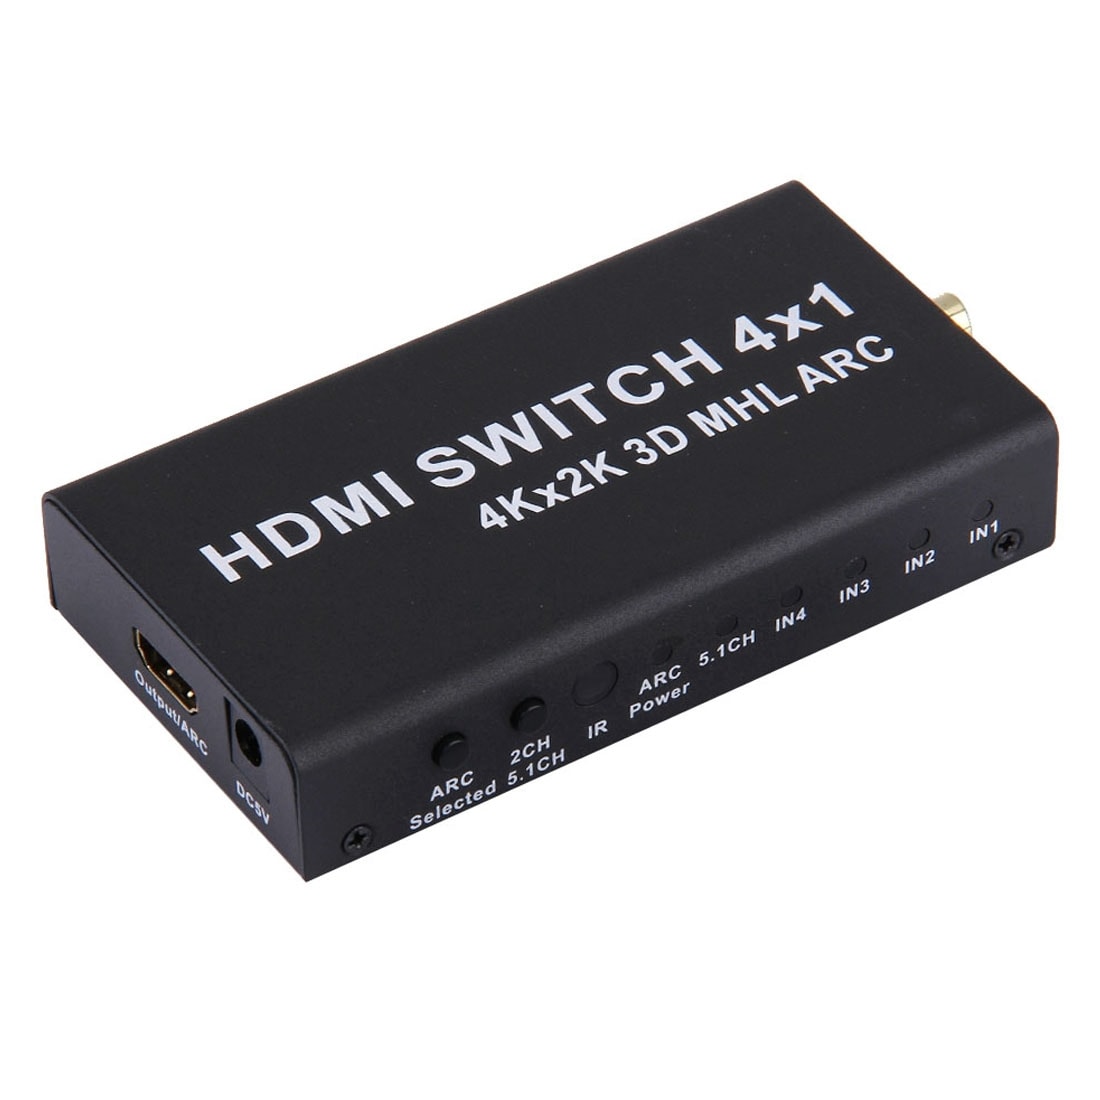 HDMI 4K 4x1 Multi-funktion Switch - ARC / MHL - Fjärr ingår